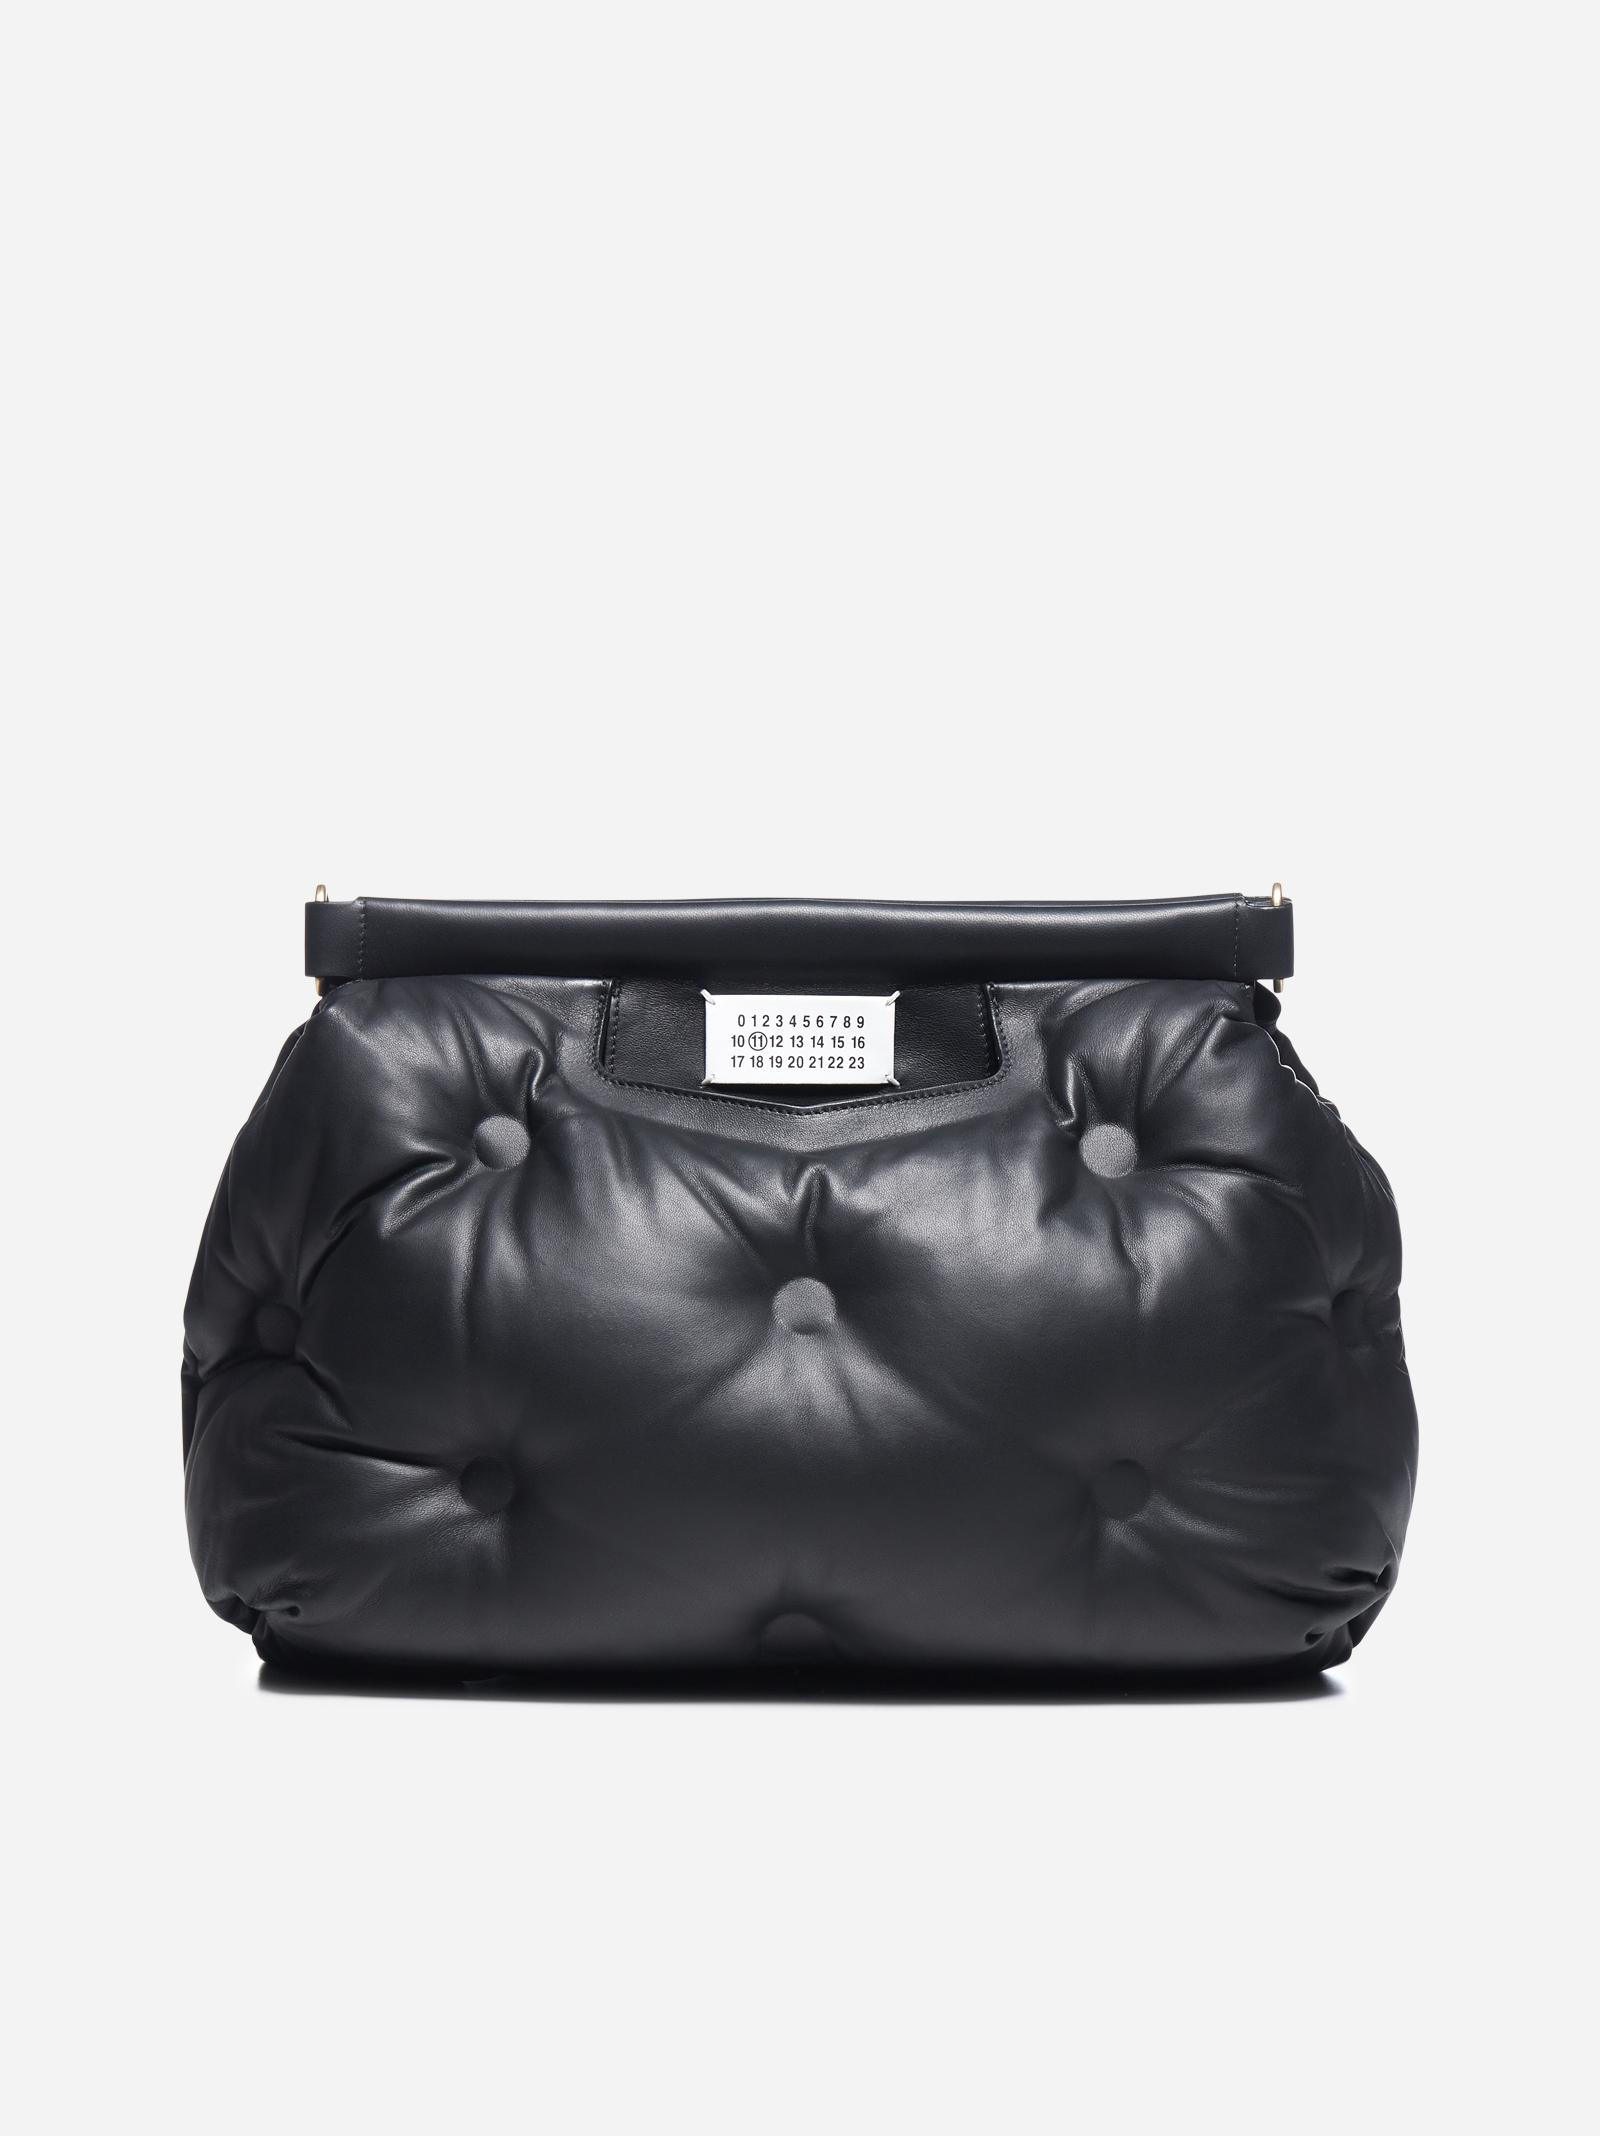 Maison Margiela Glam Slam Medium Quilted Leather Bag in Black - Lyst